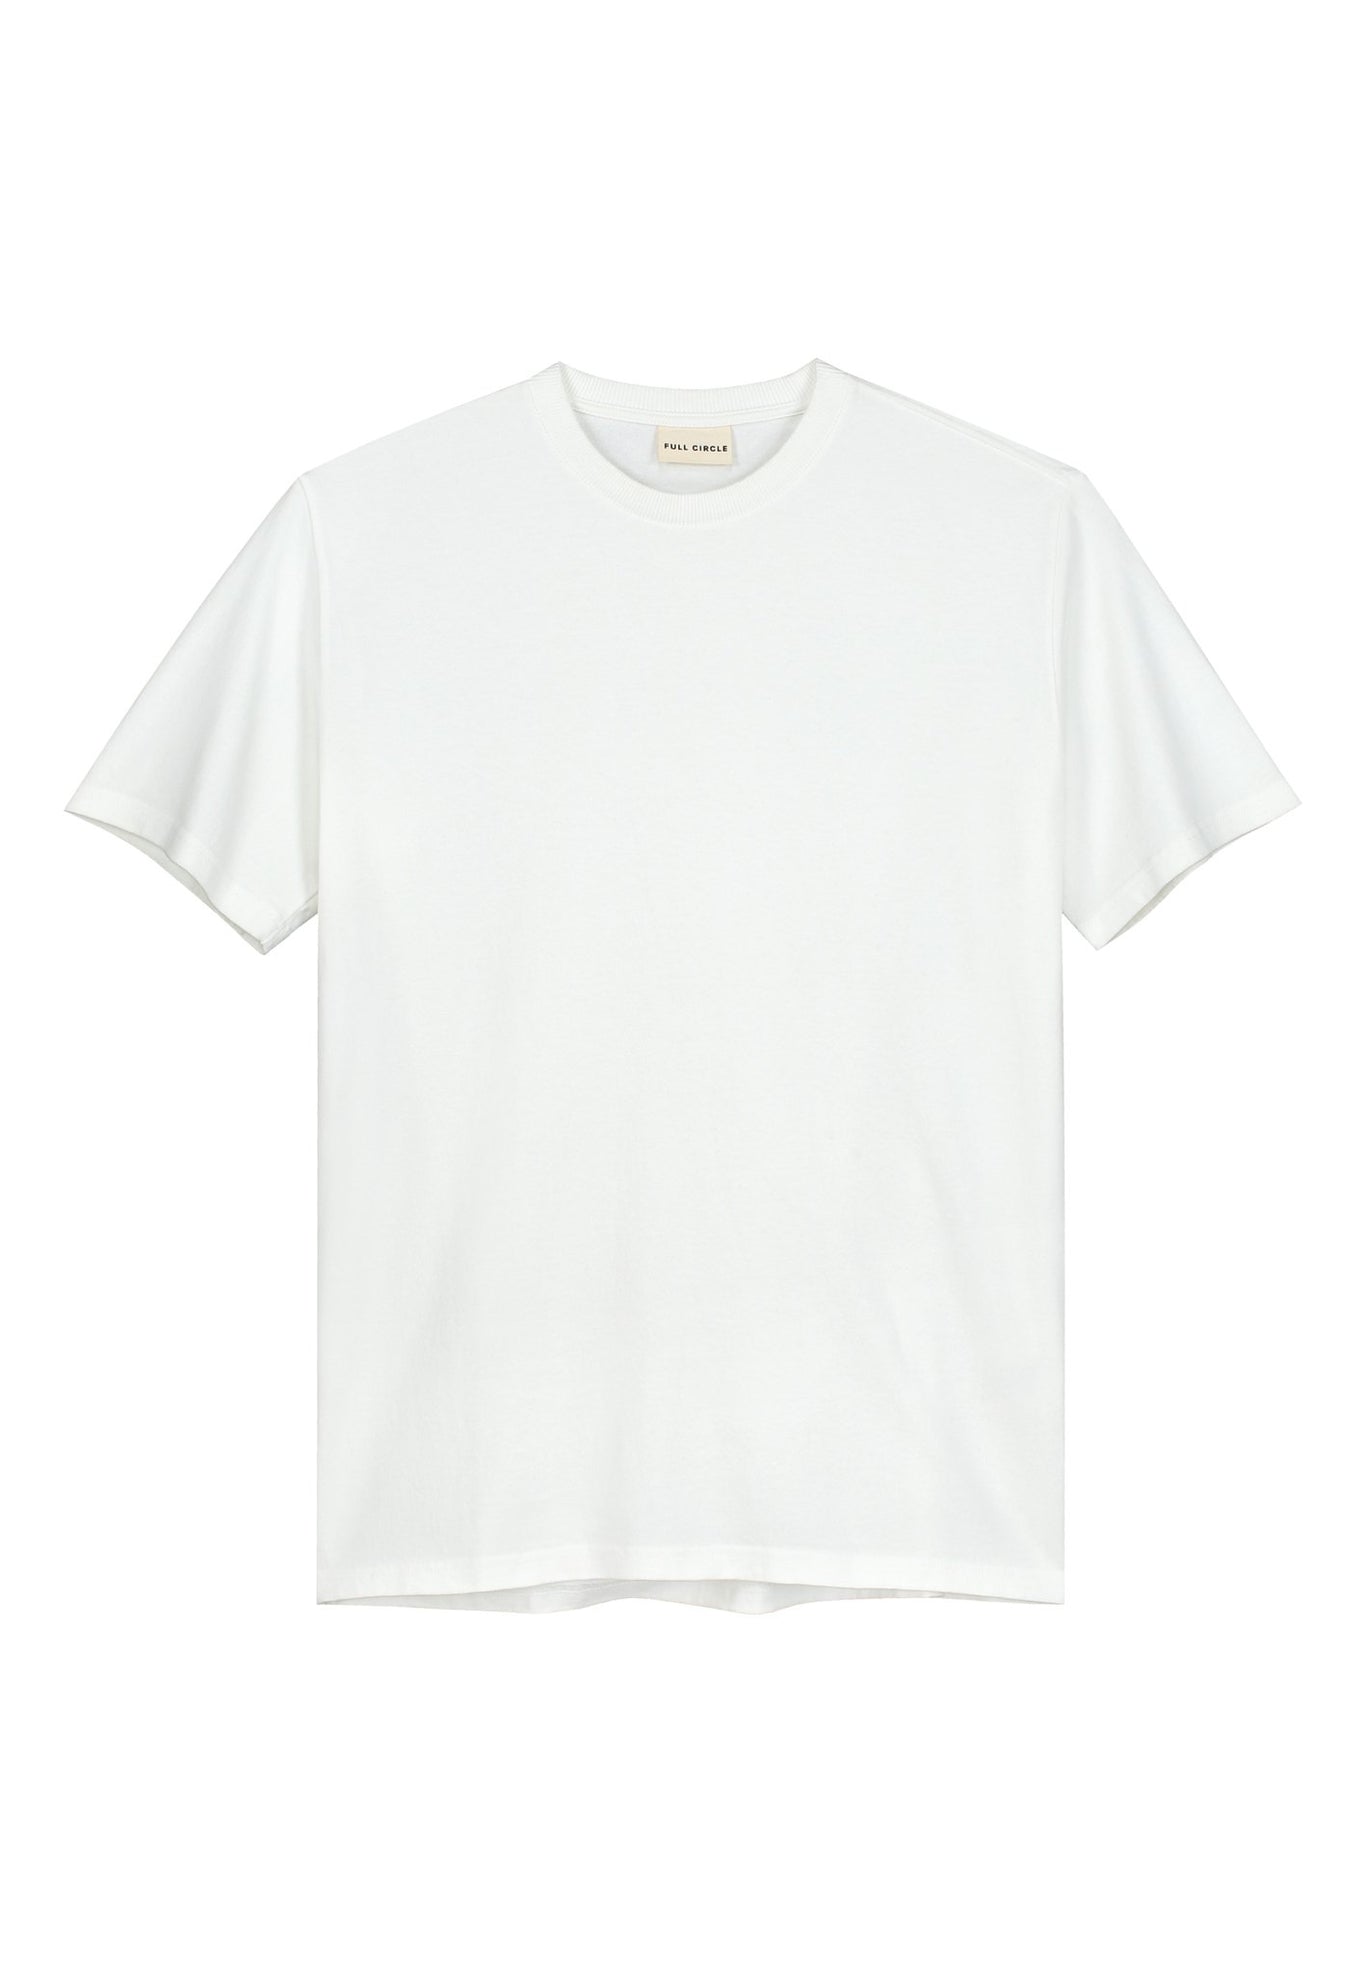 Full Circle White Organic T-shirt